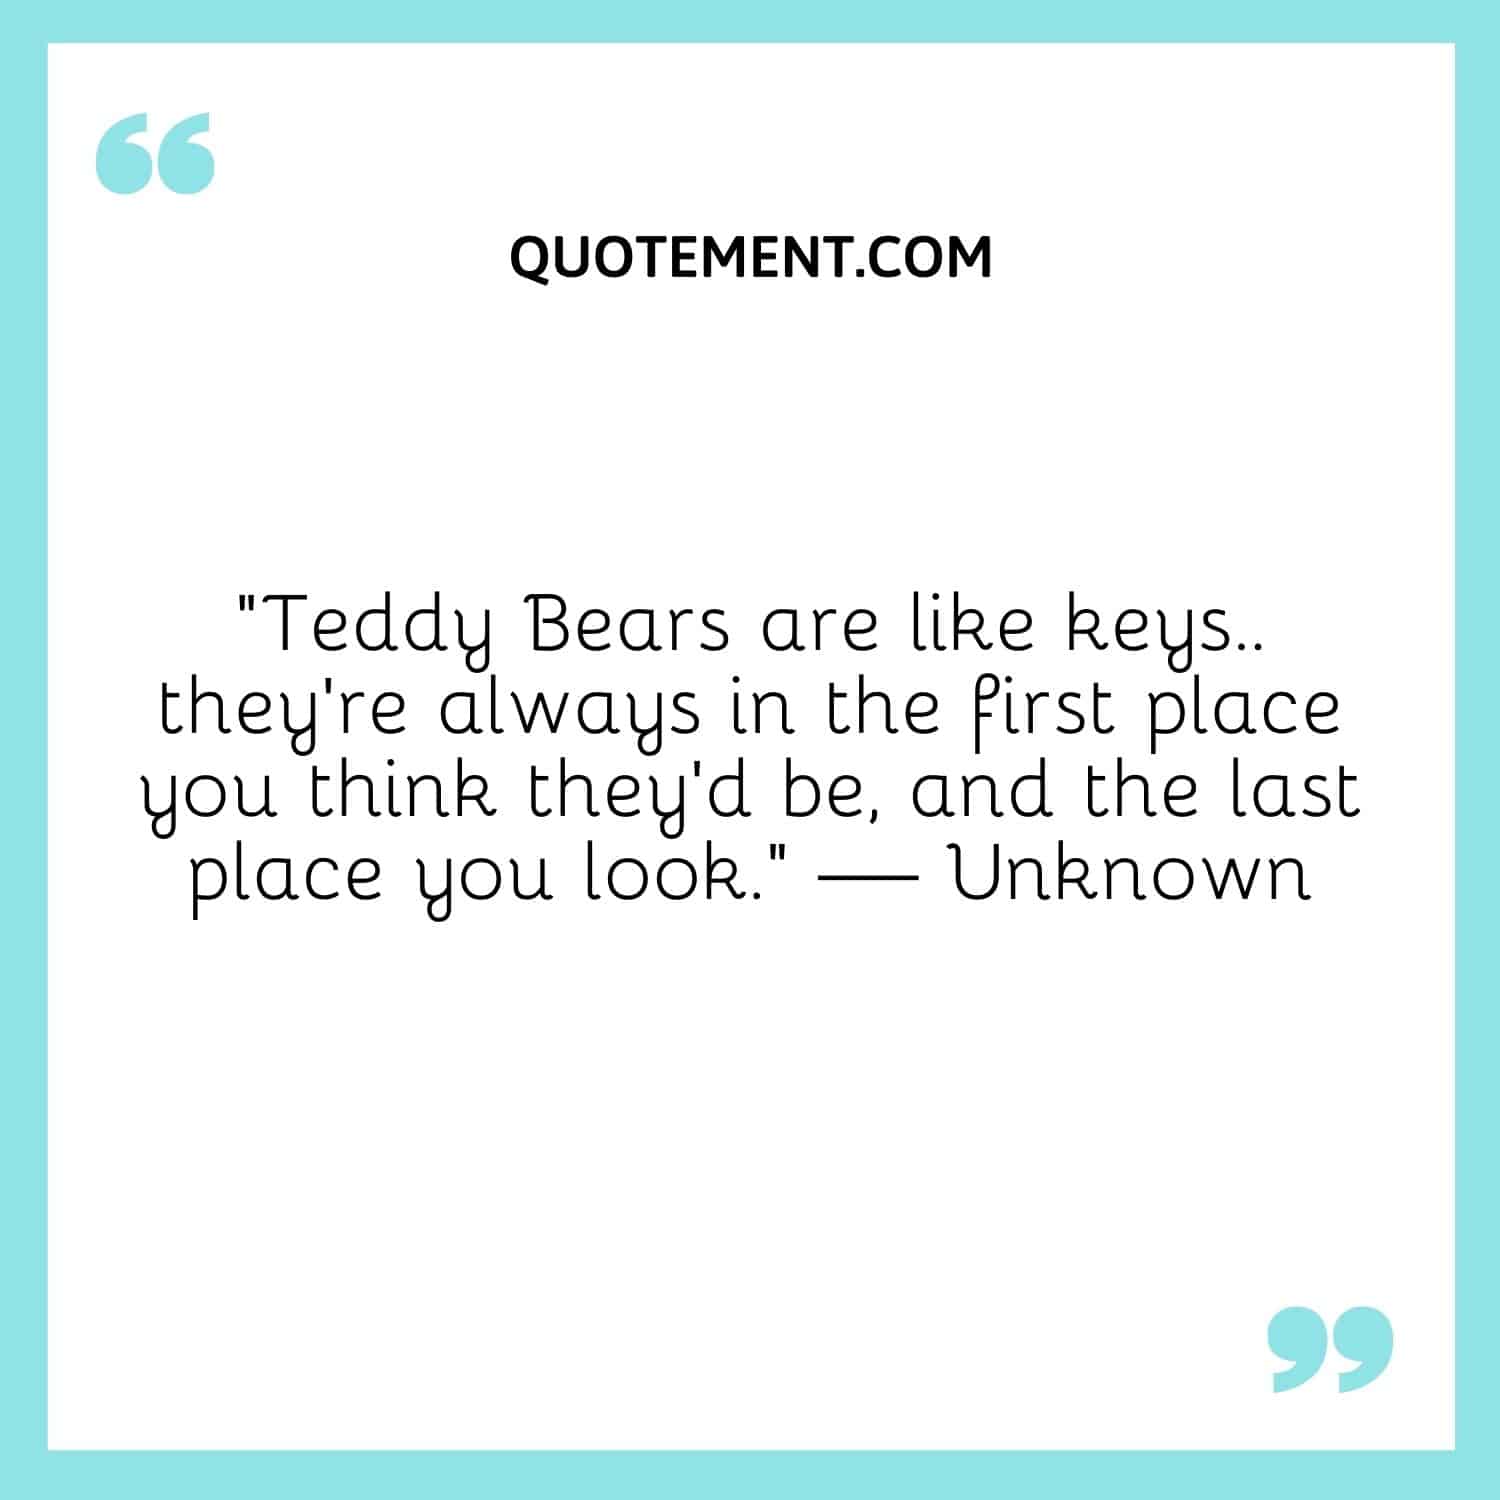 Teddy Bears are like keys